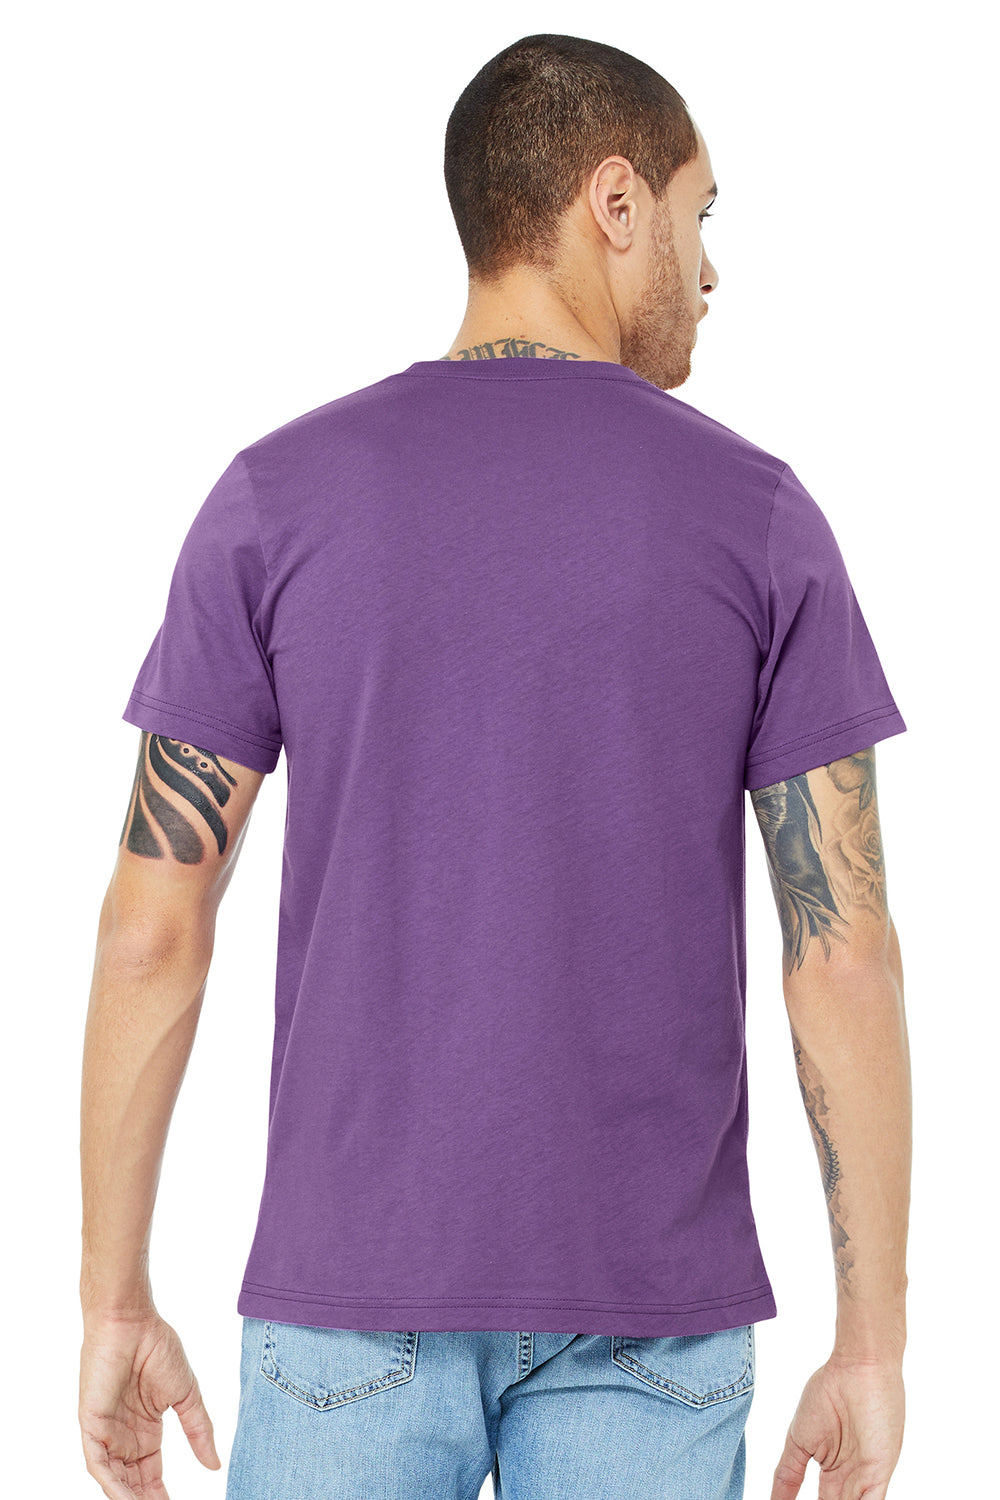 Bella + Canvas BC3001/3001C Mens Jersey Short Sleeve Crewneck T-Shirt Royal Purple Model Back